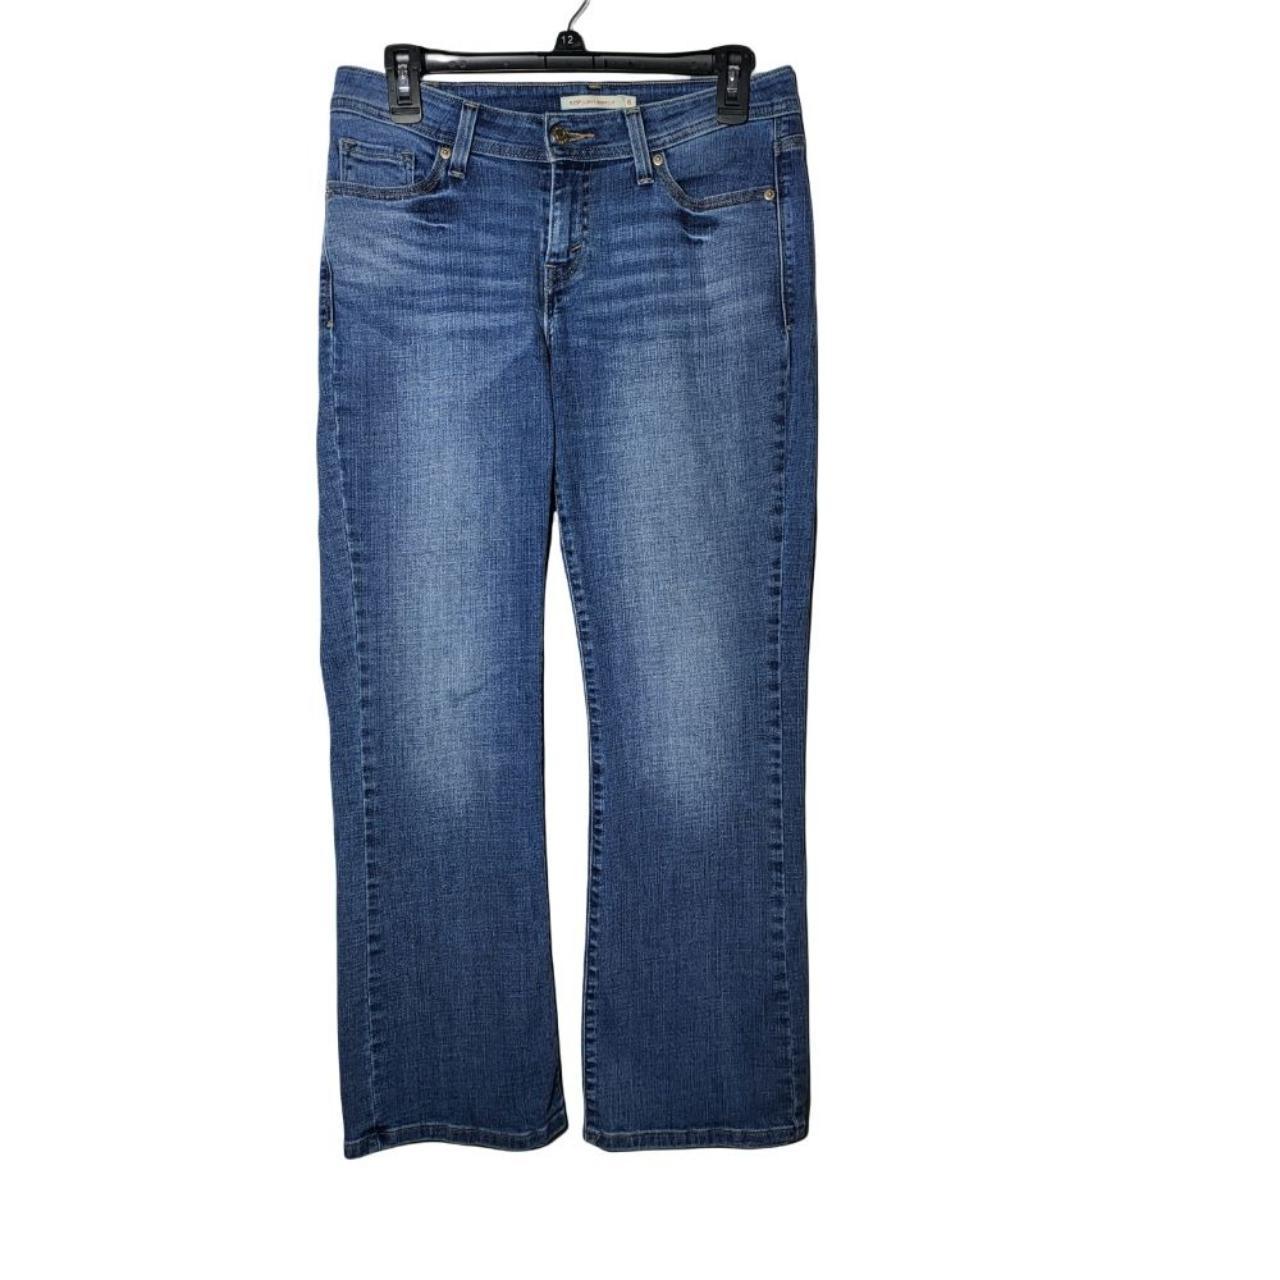 Levi's 529 Curvy Bootcut Denim Blue Jeans Women's... - Depop